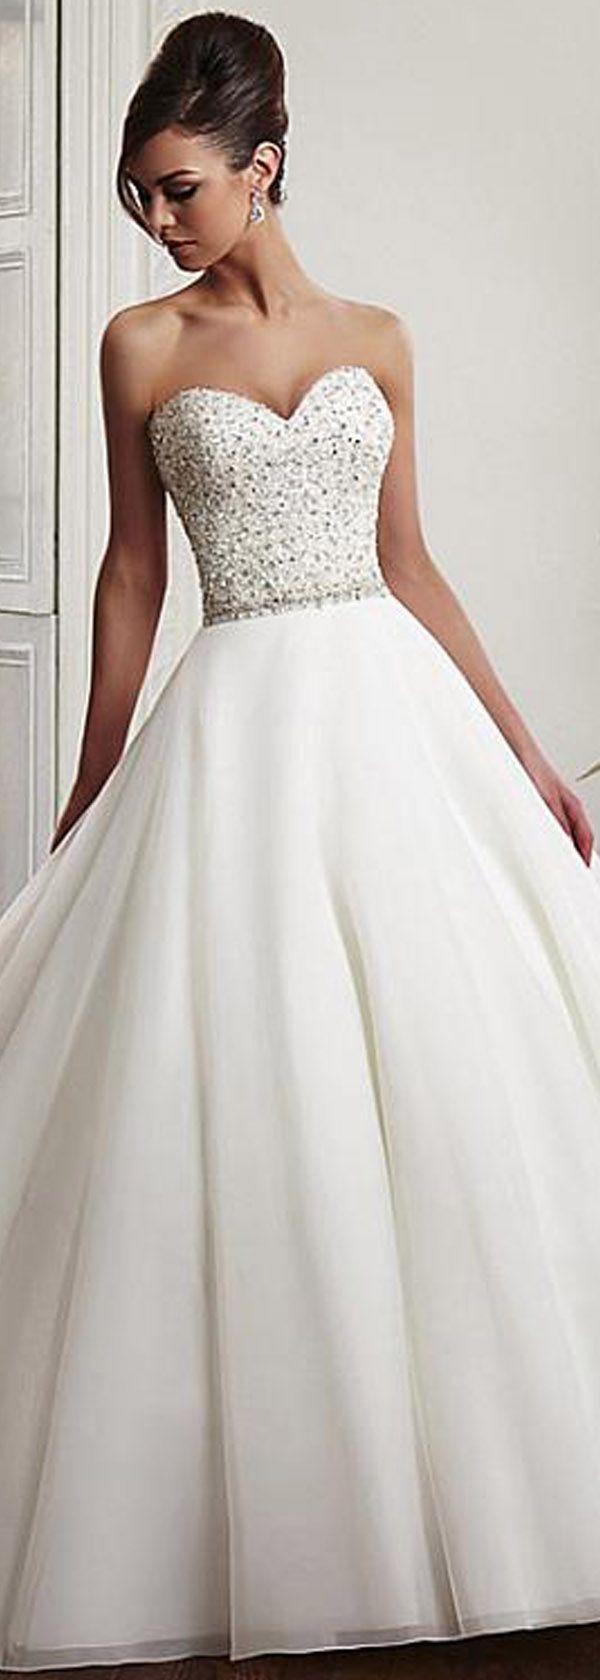 Wedding - The Dress